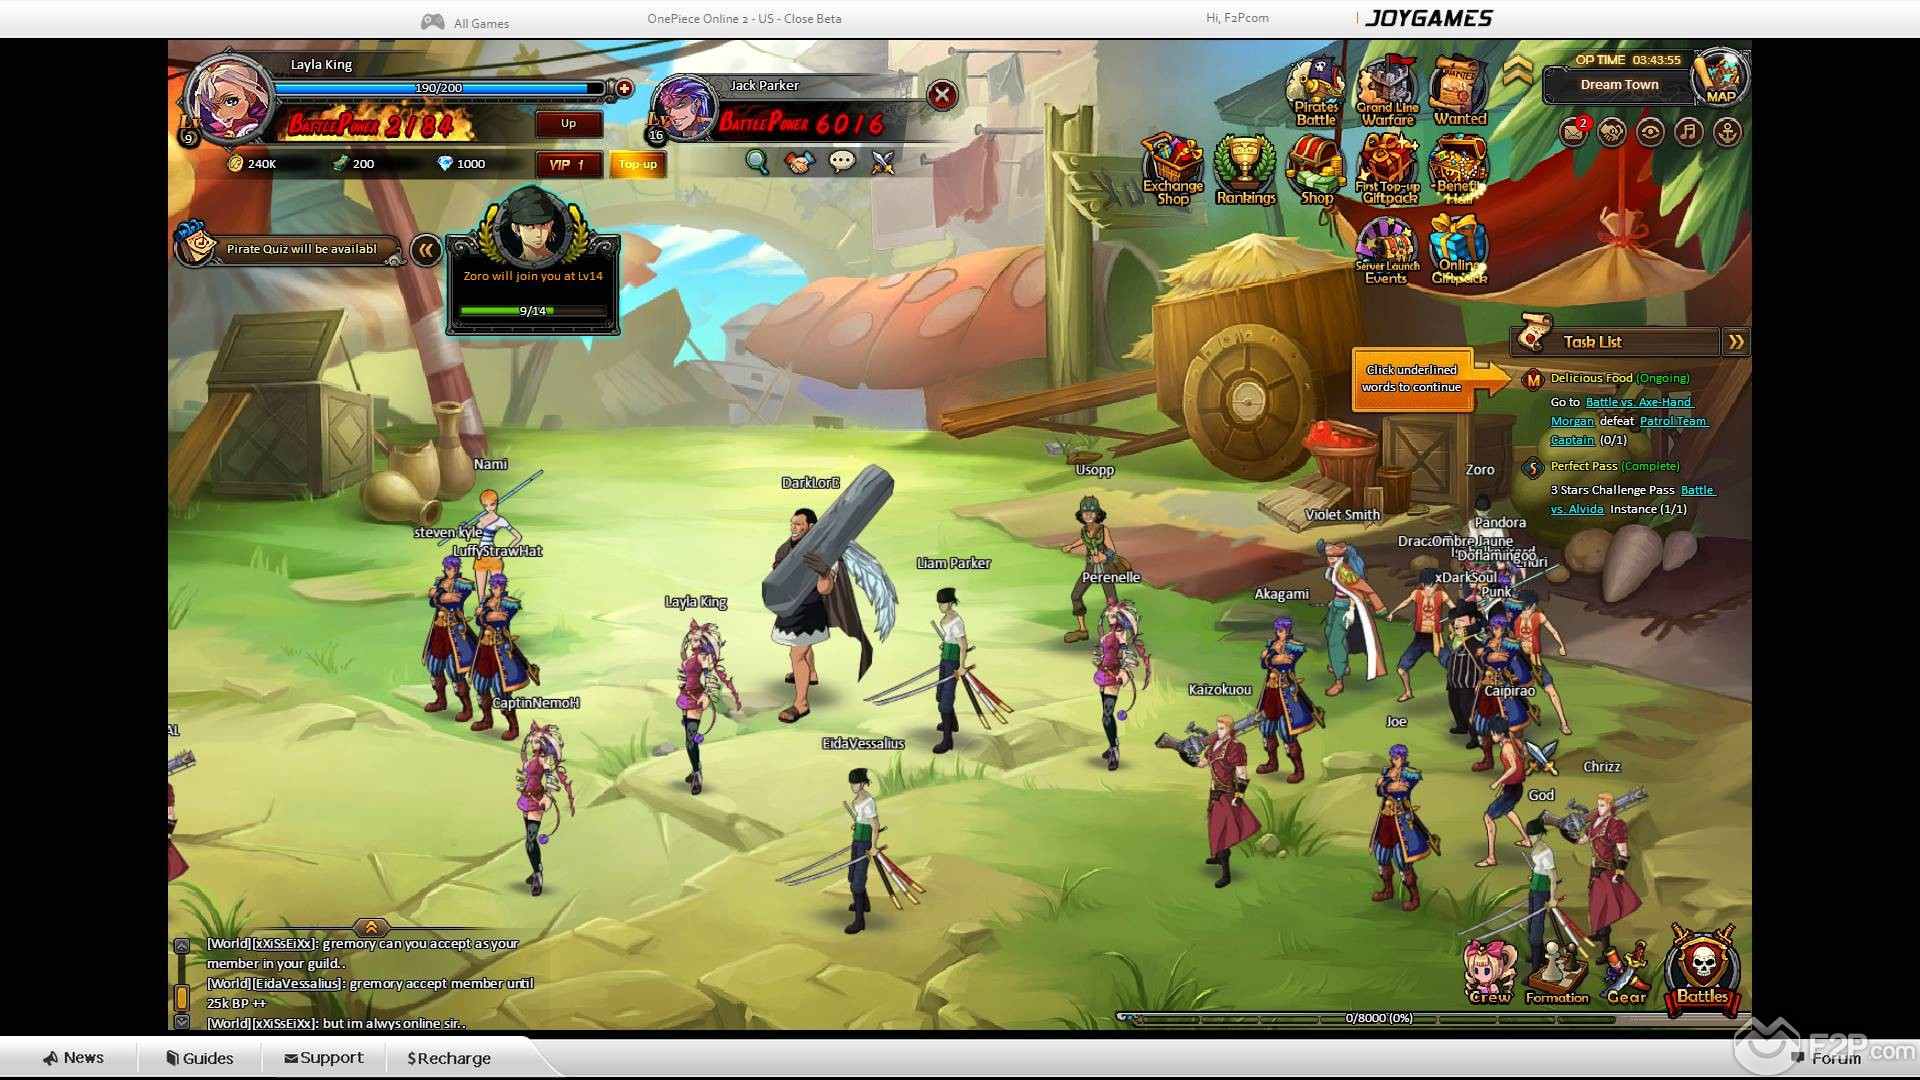 One Piece Online 2: Pirate King Screenshots